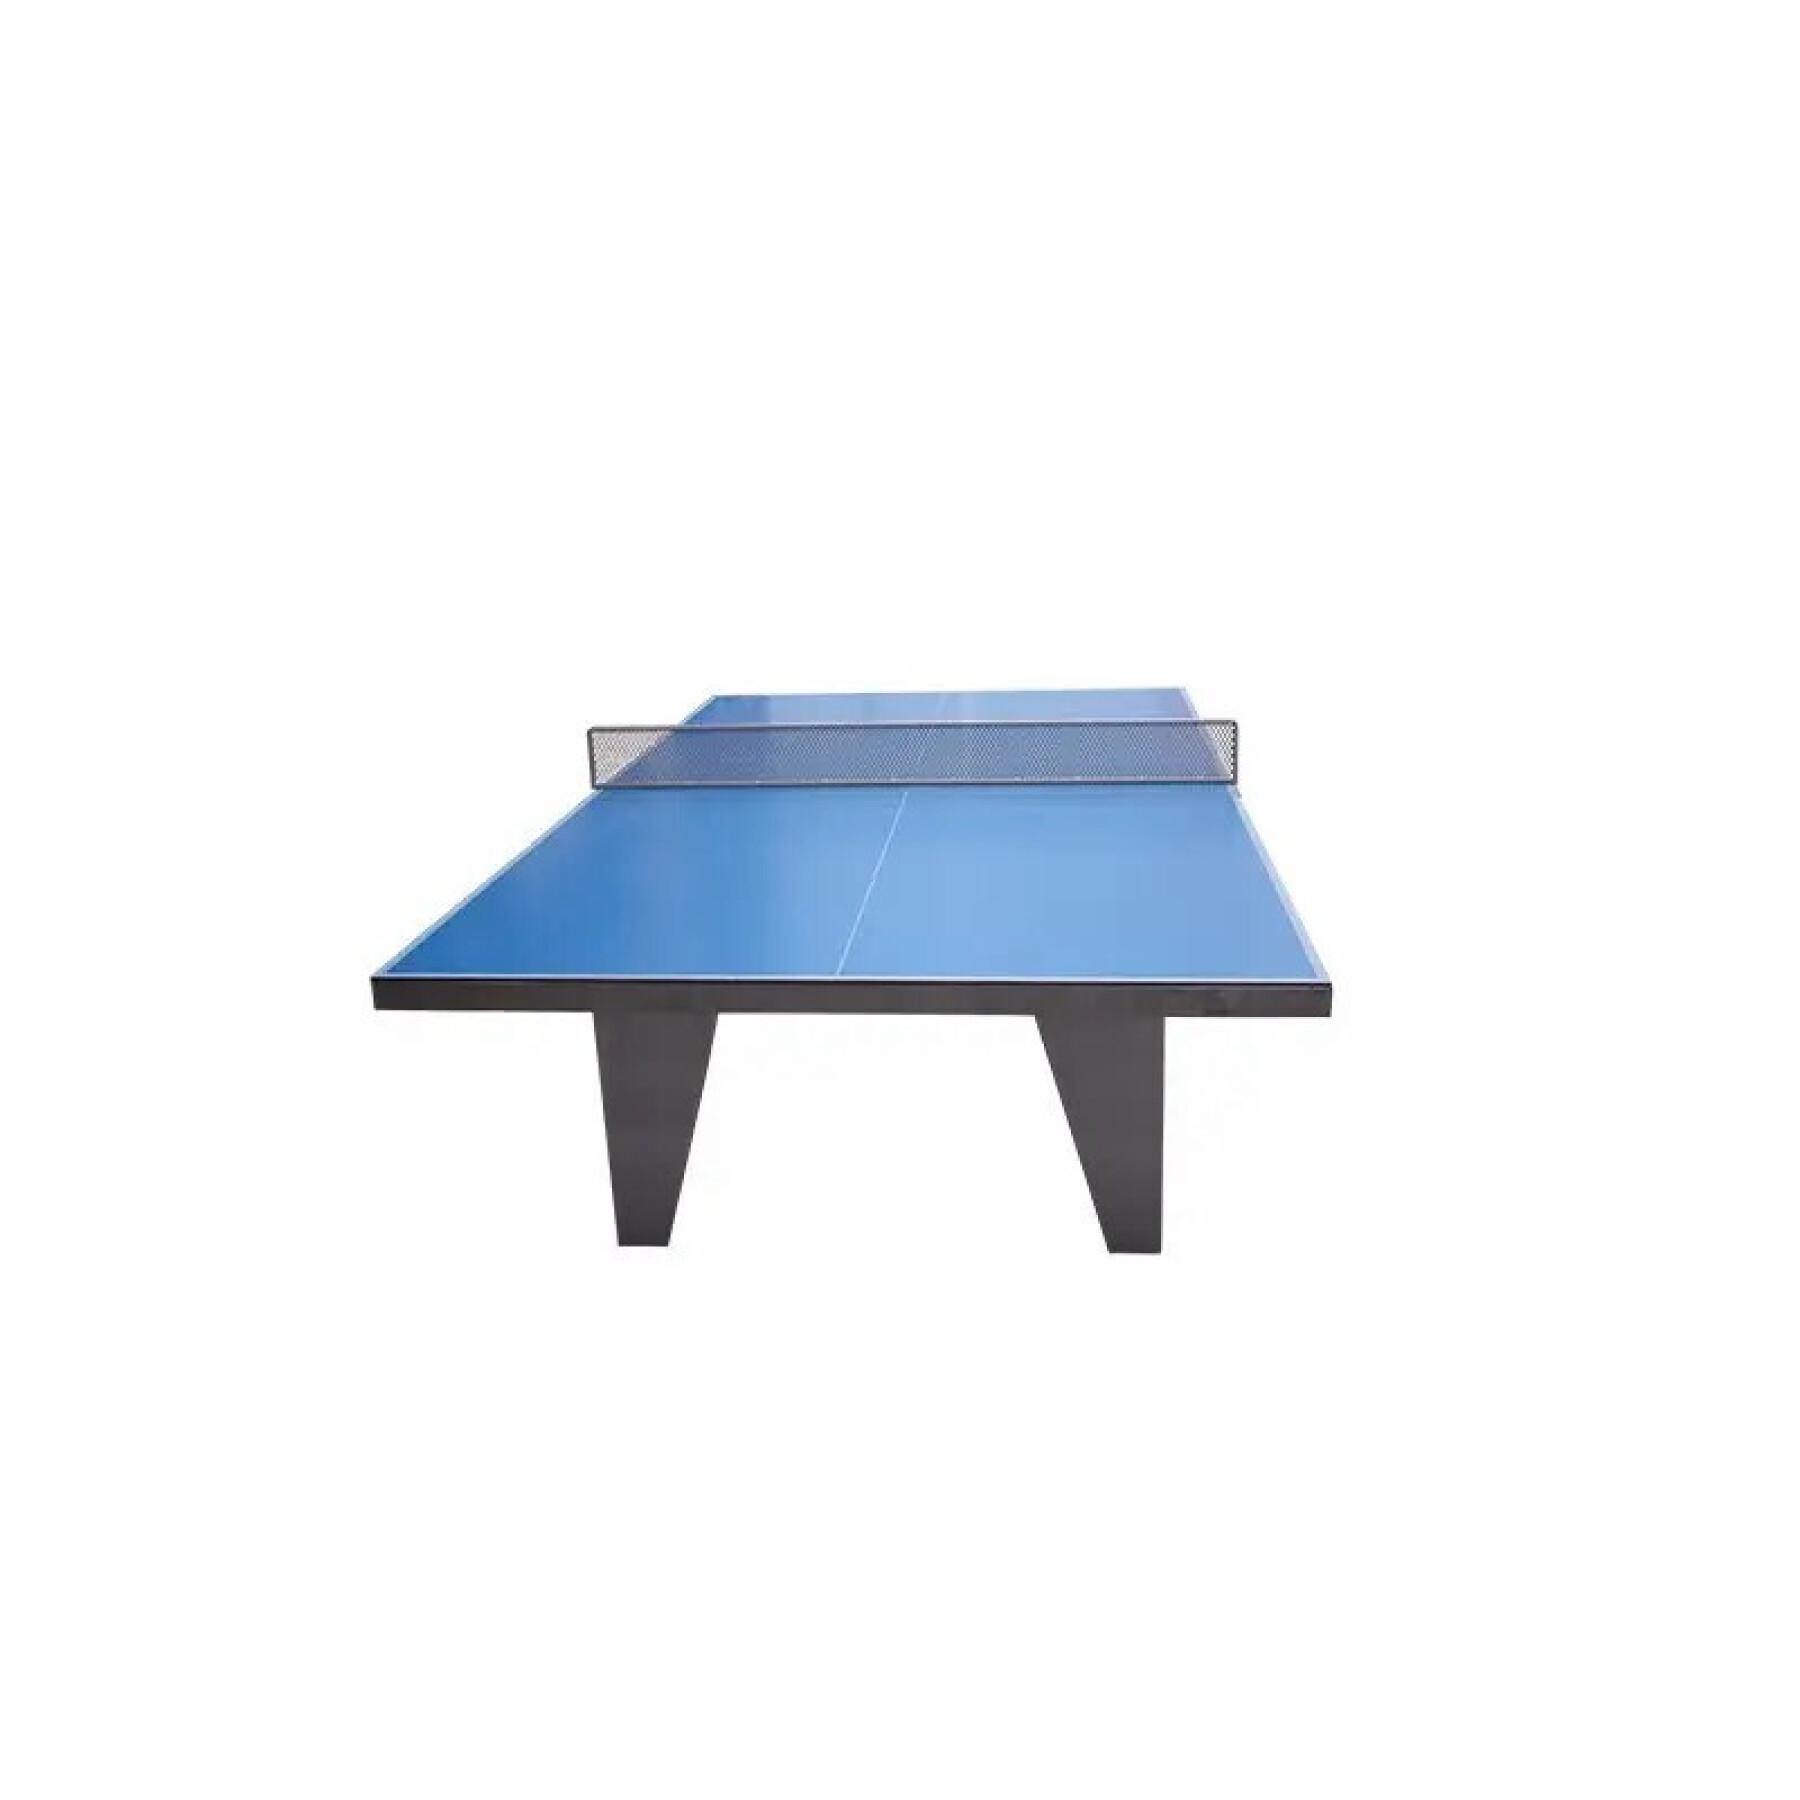 Rete da ping pong in metallo antivandalo Softee